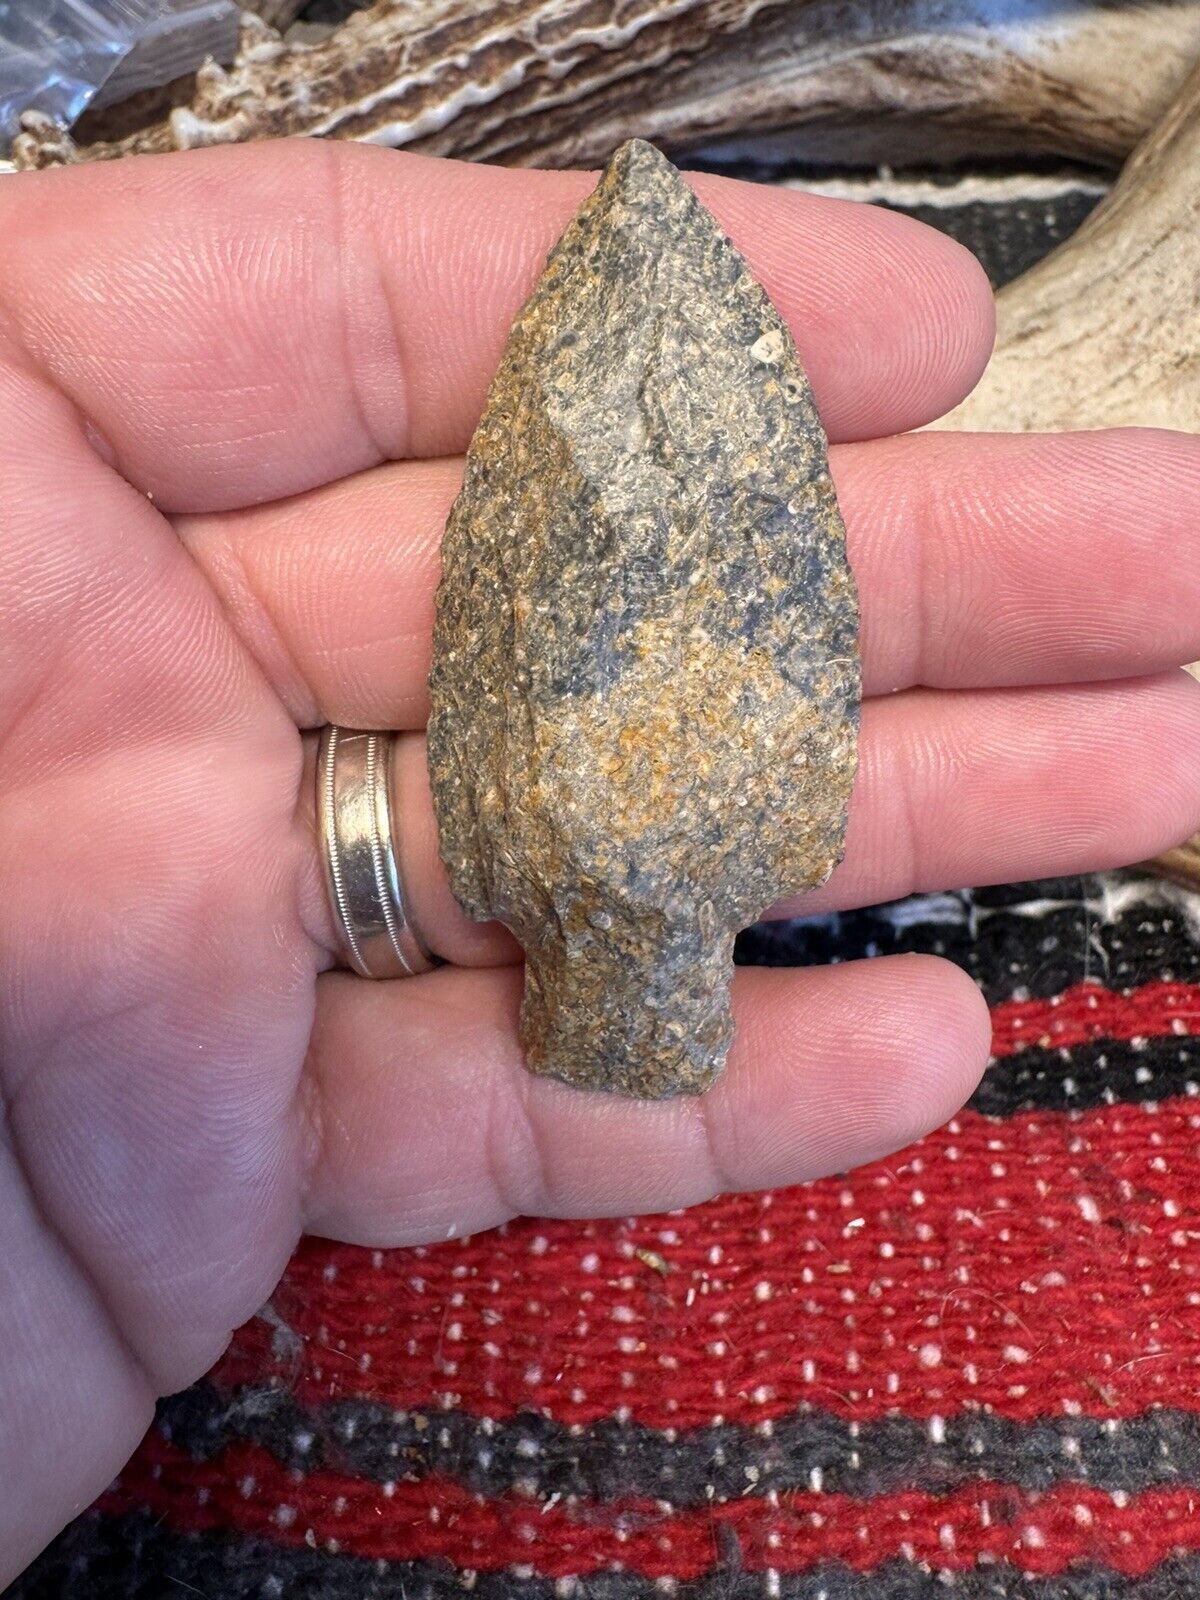 Table Rock Arrowhead Archaic Period Indiana. M9